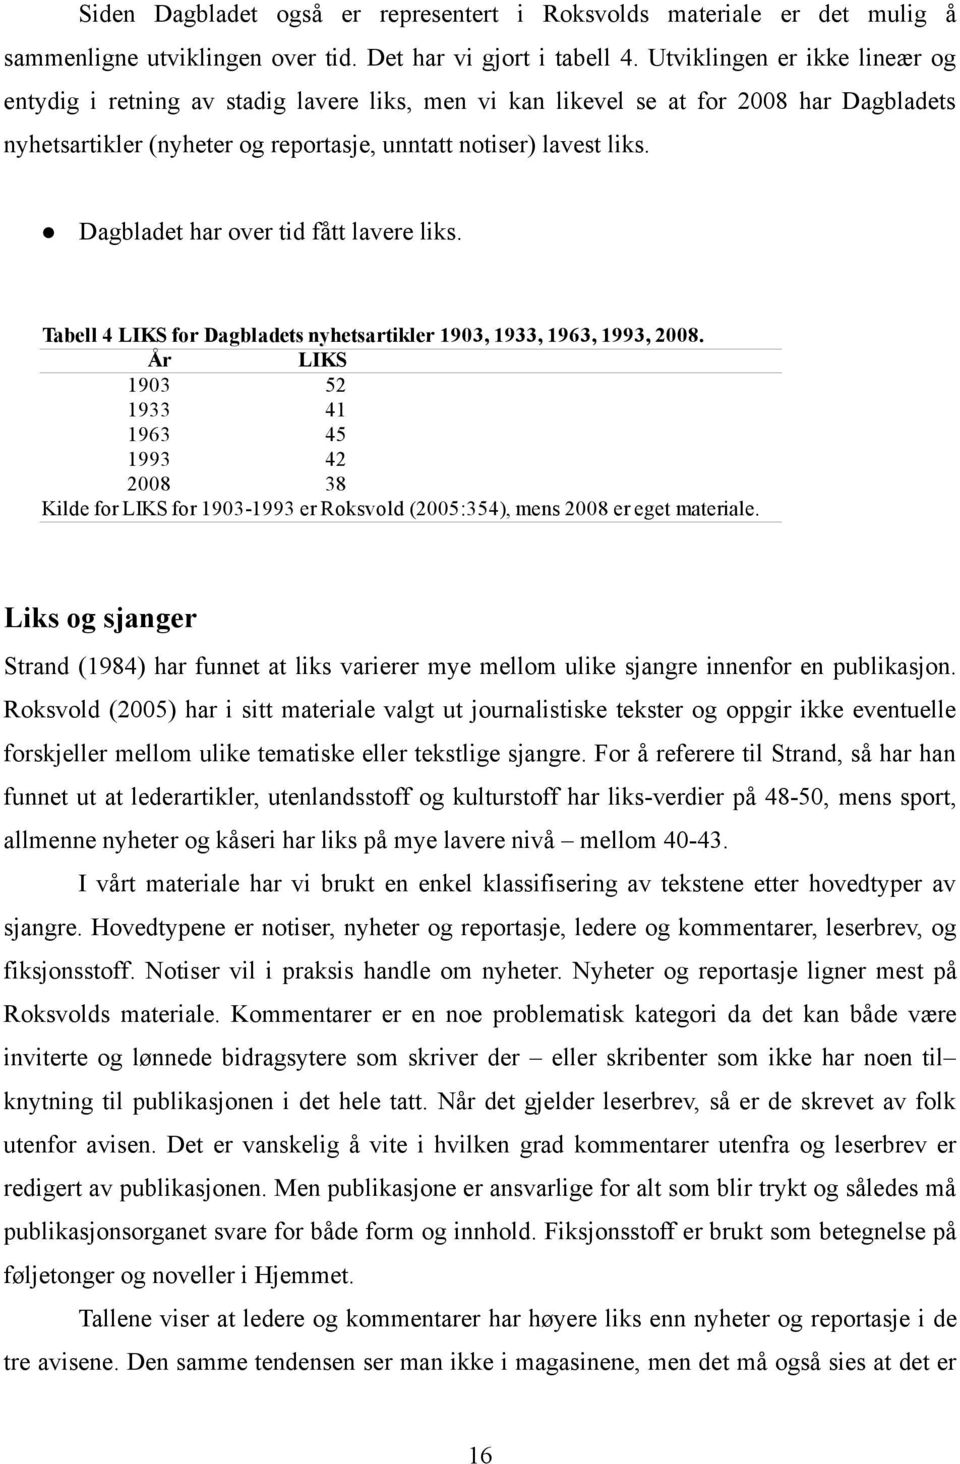 Dagbladet har over tid fått lavere liks. Tabell 4 LIKS for Dagbladets nyhetsartikler 1903, 1933, 1963, 1993, 2008.